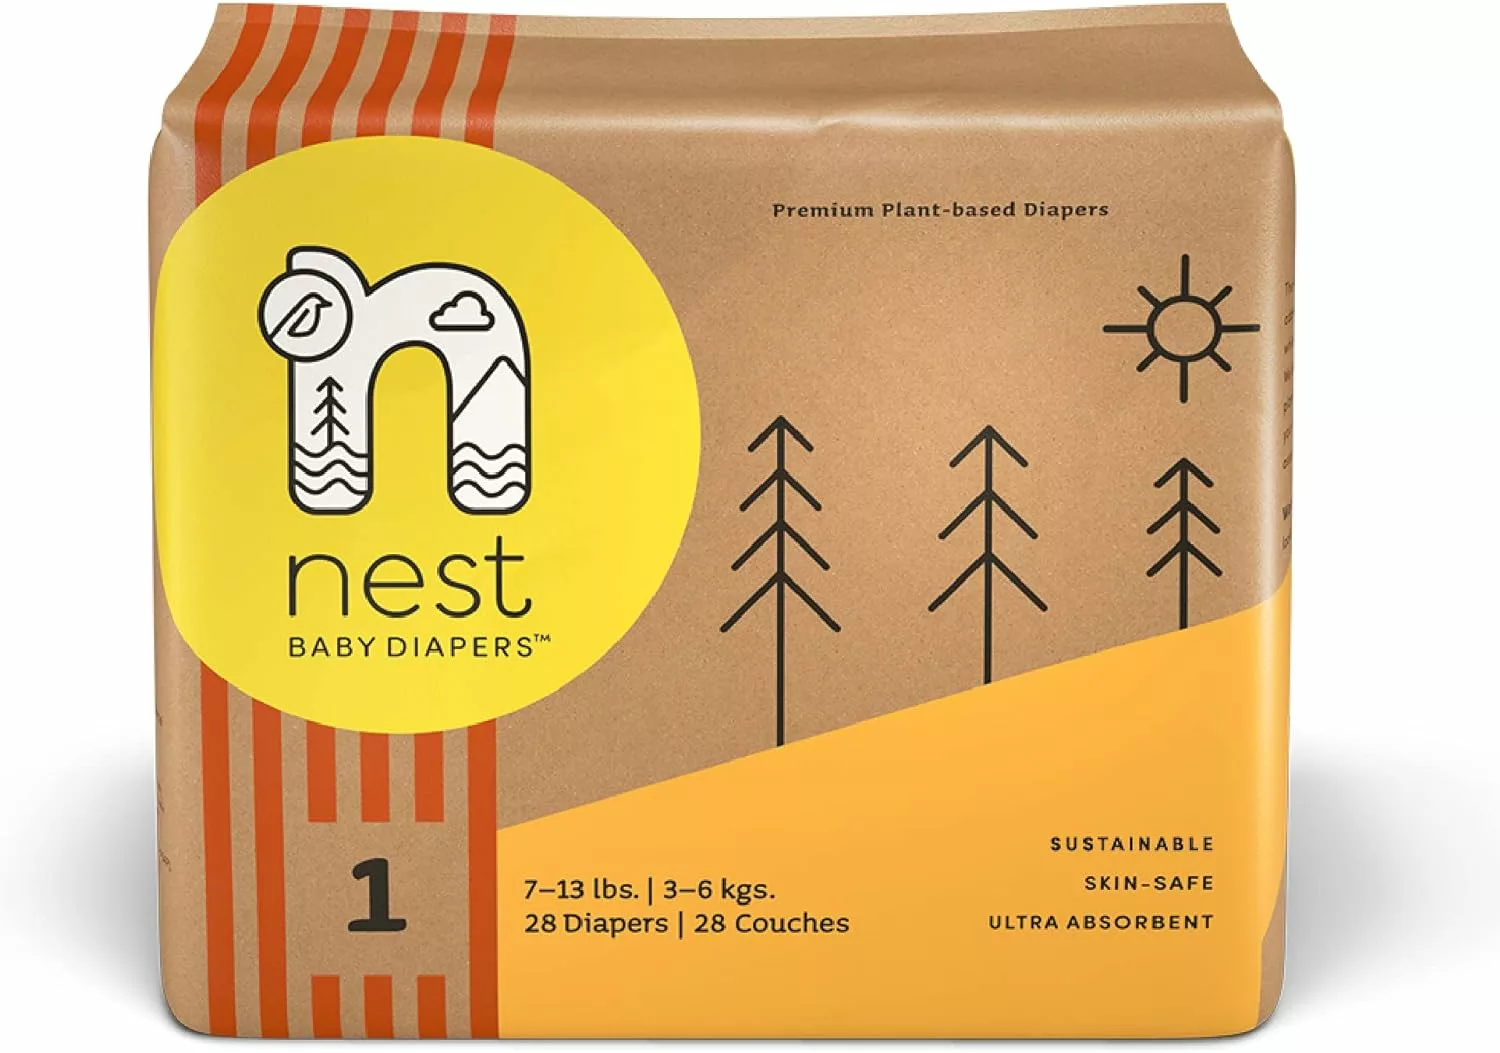 Nest baby diapers